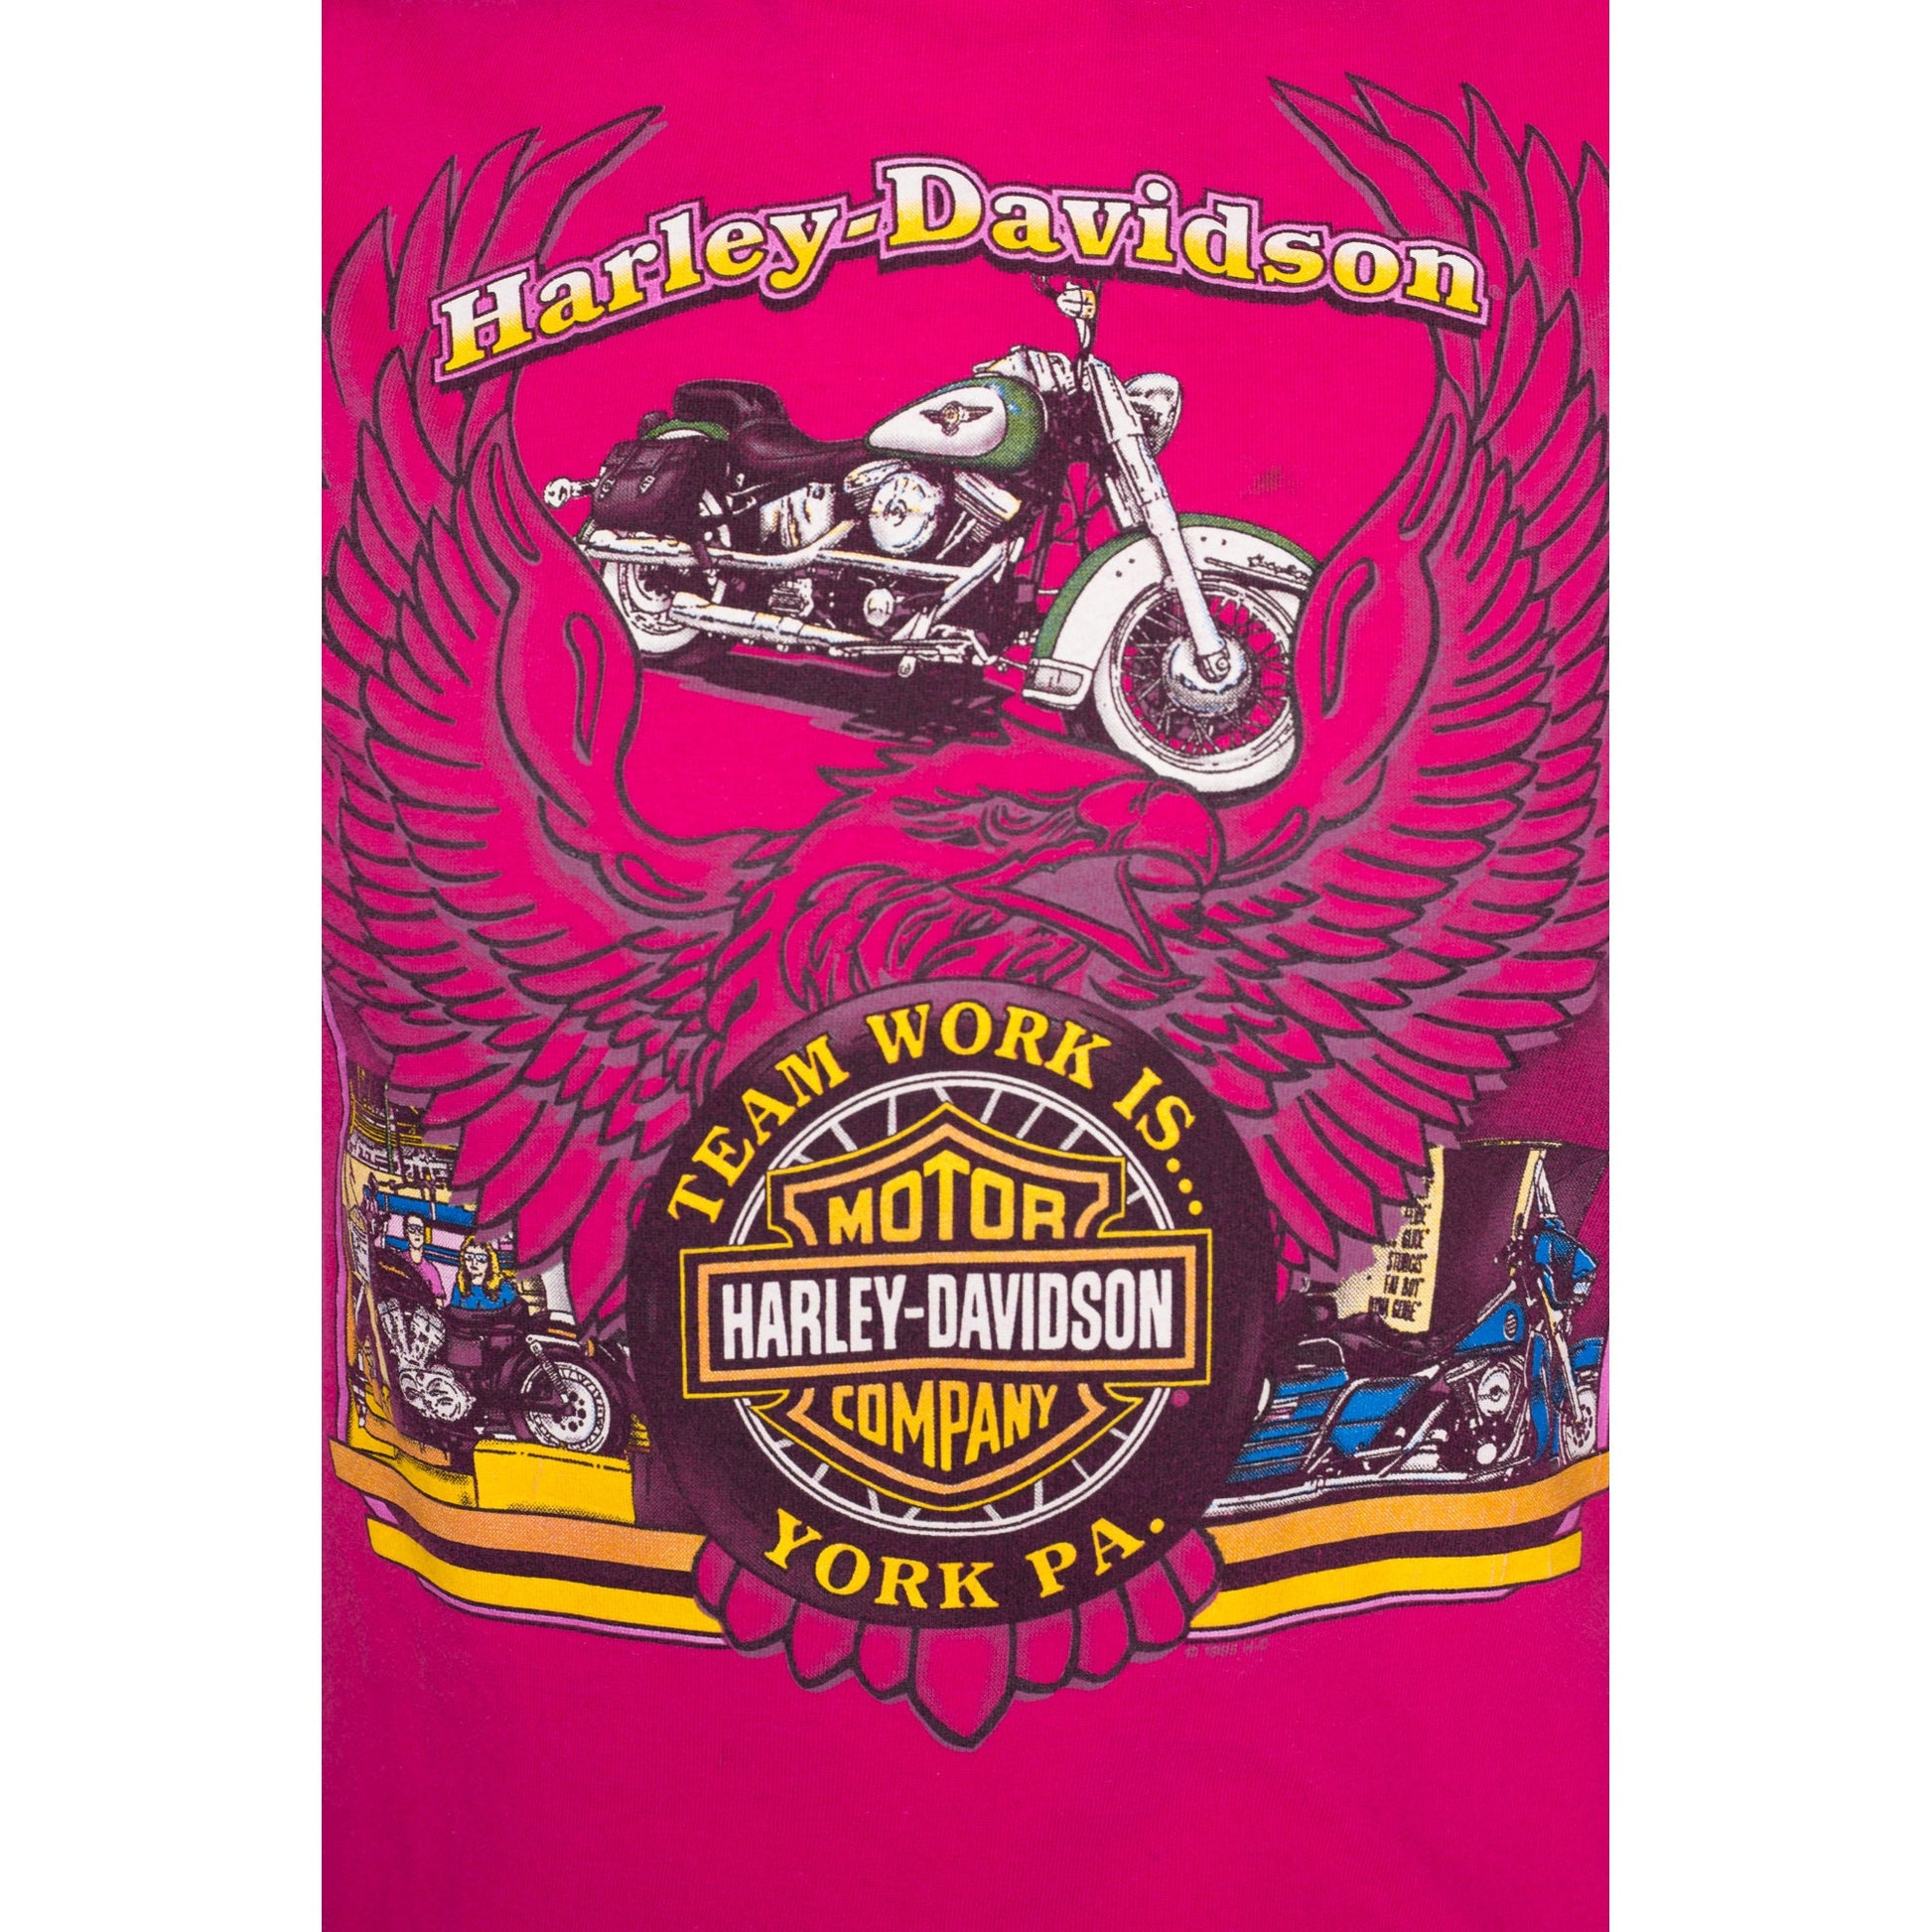 90s Harley Davidson York Pennsylvania Hot Pink T Shirt - Small | Vintage Motorcycle Bald Eagle Graphic Tee